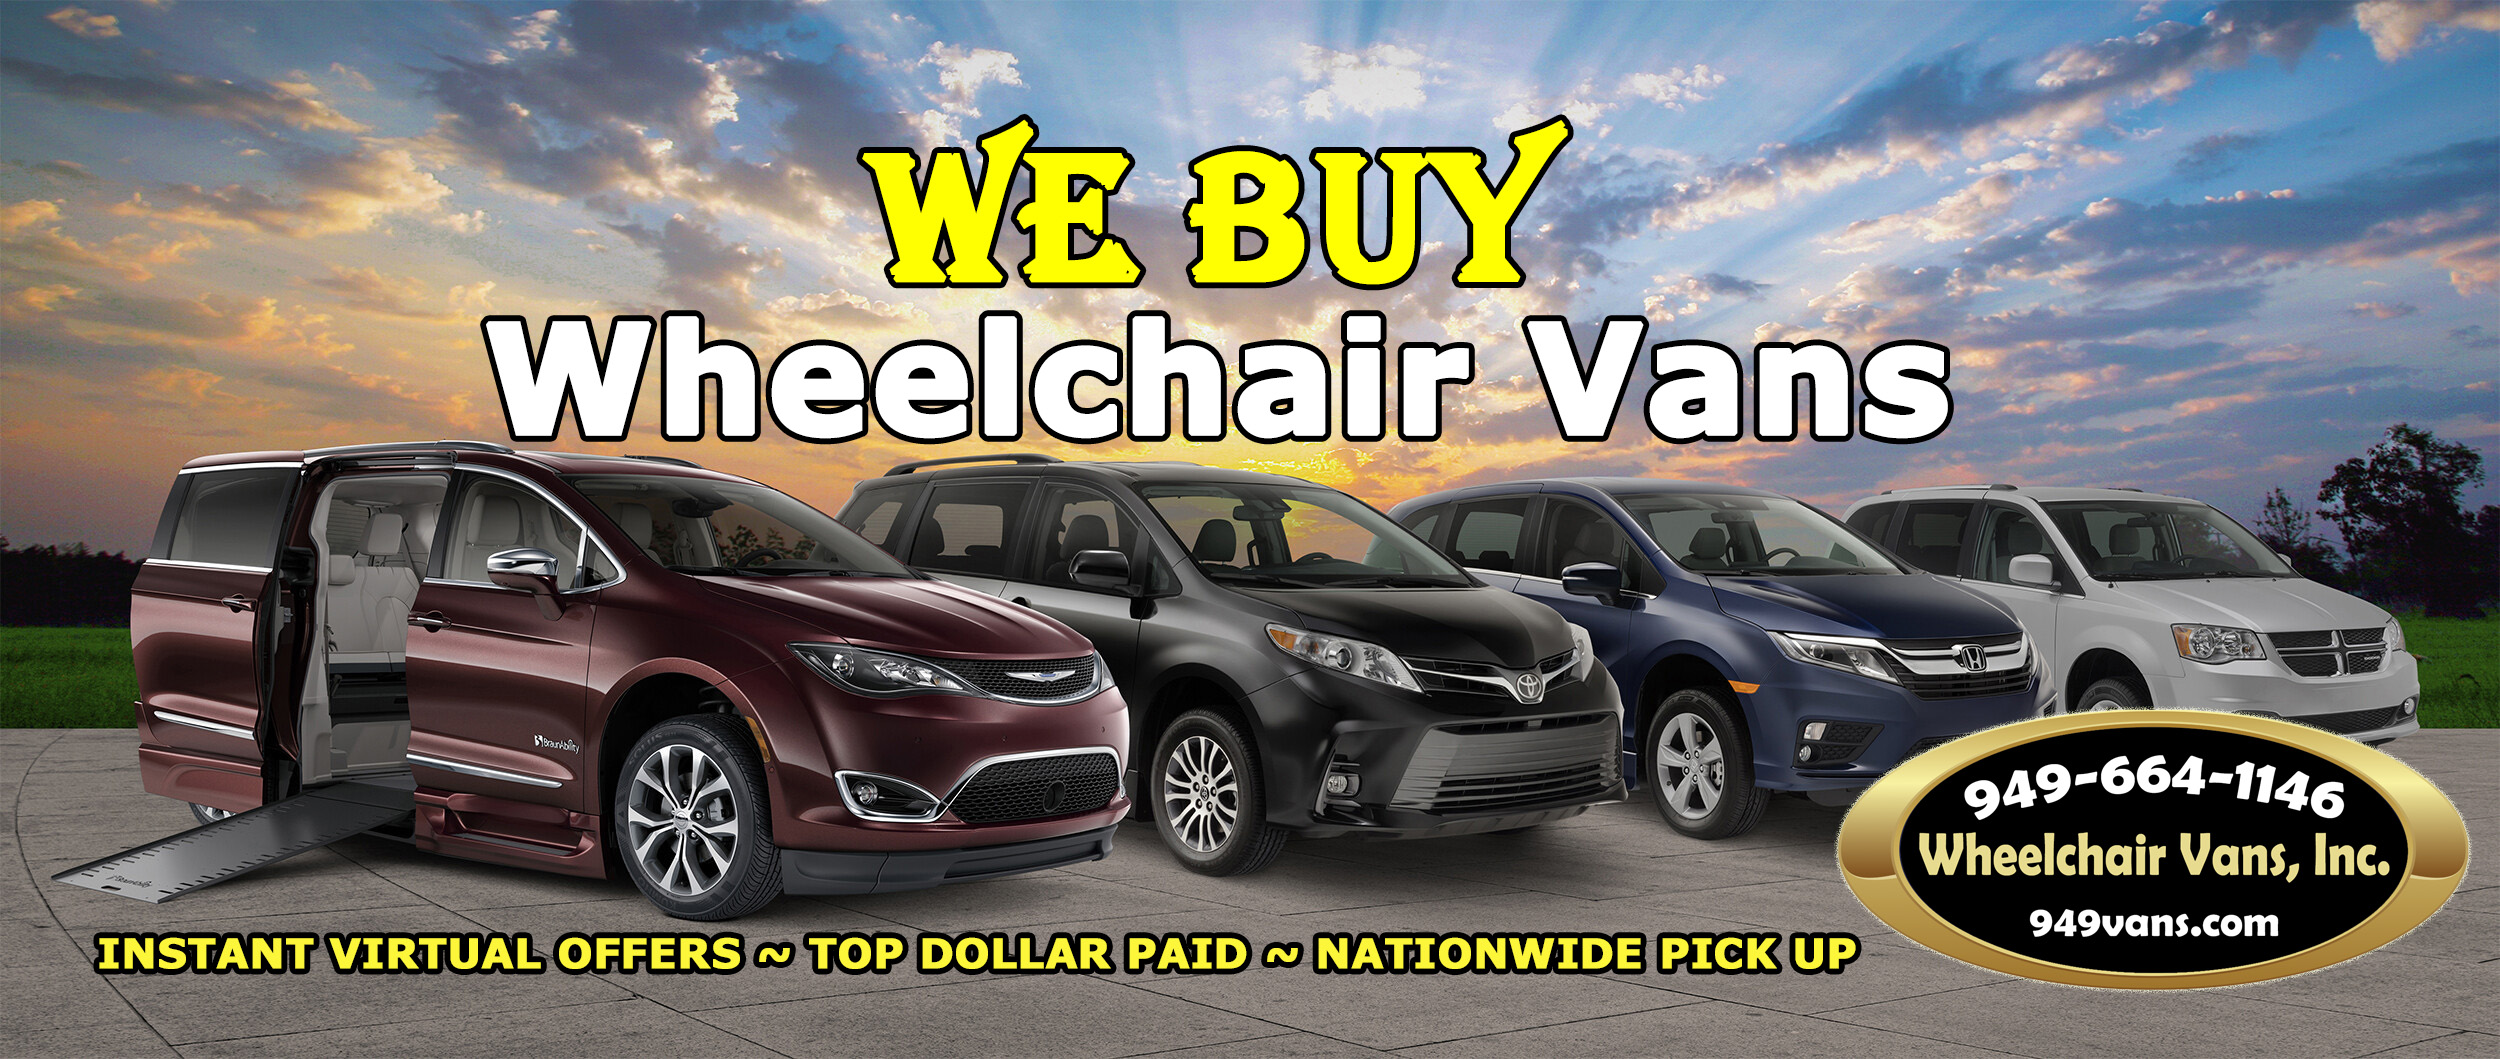 We buy wheelchair vans and automobiles